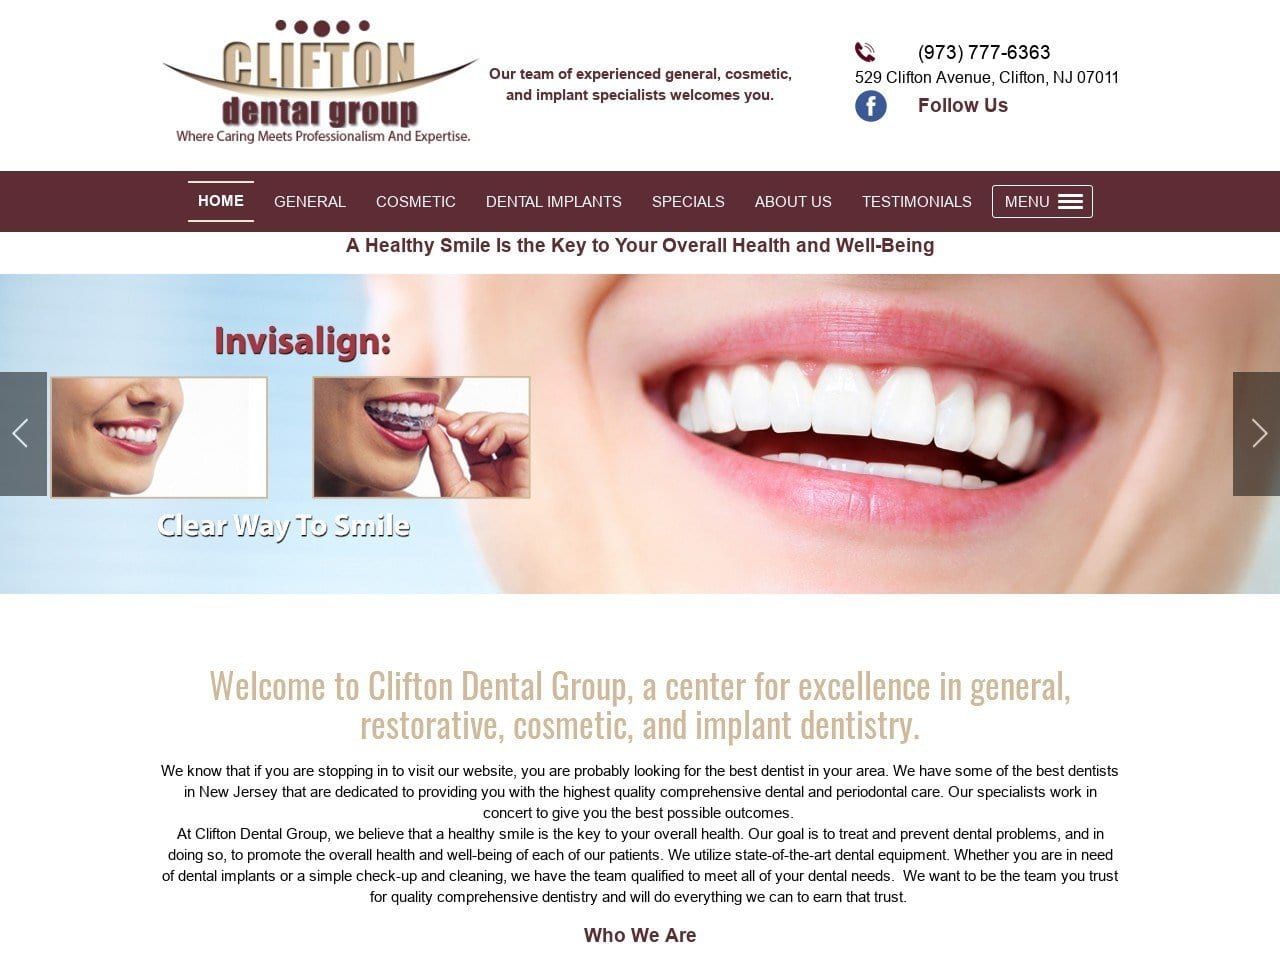 Clifton Dental Group Website Screenshot from cliftondentalgroup.com